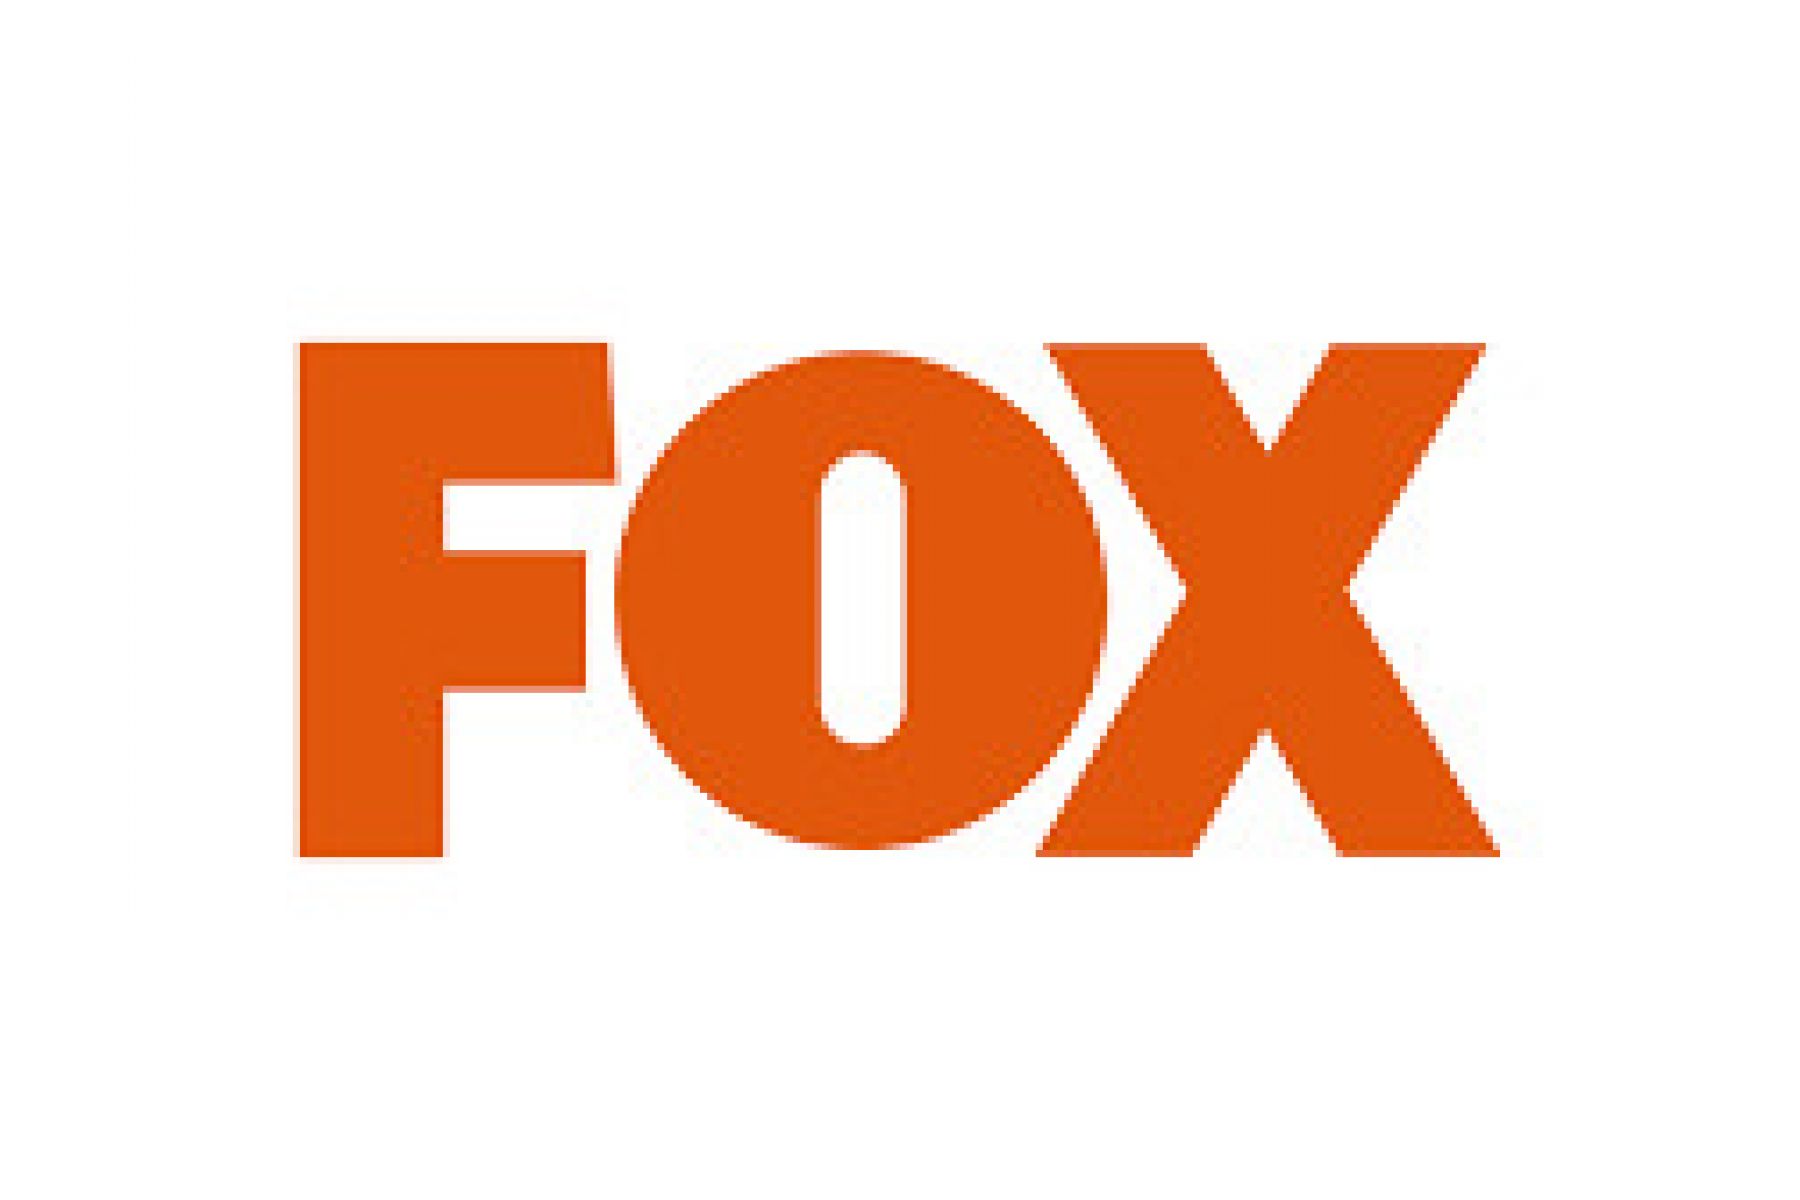 Fox TV.